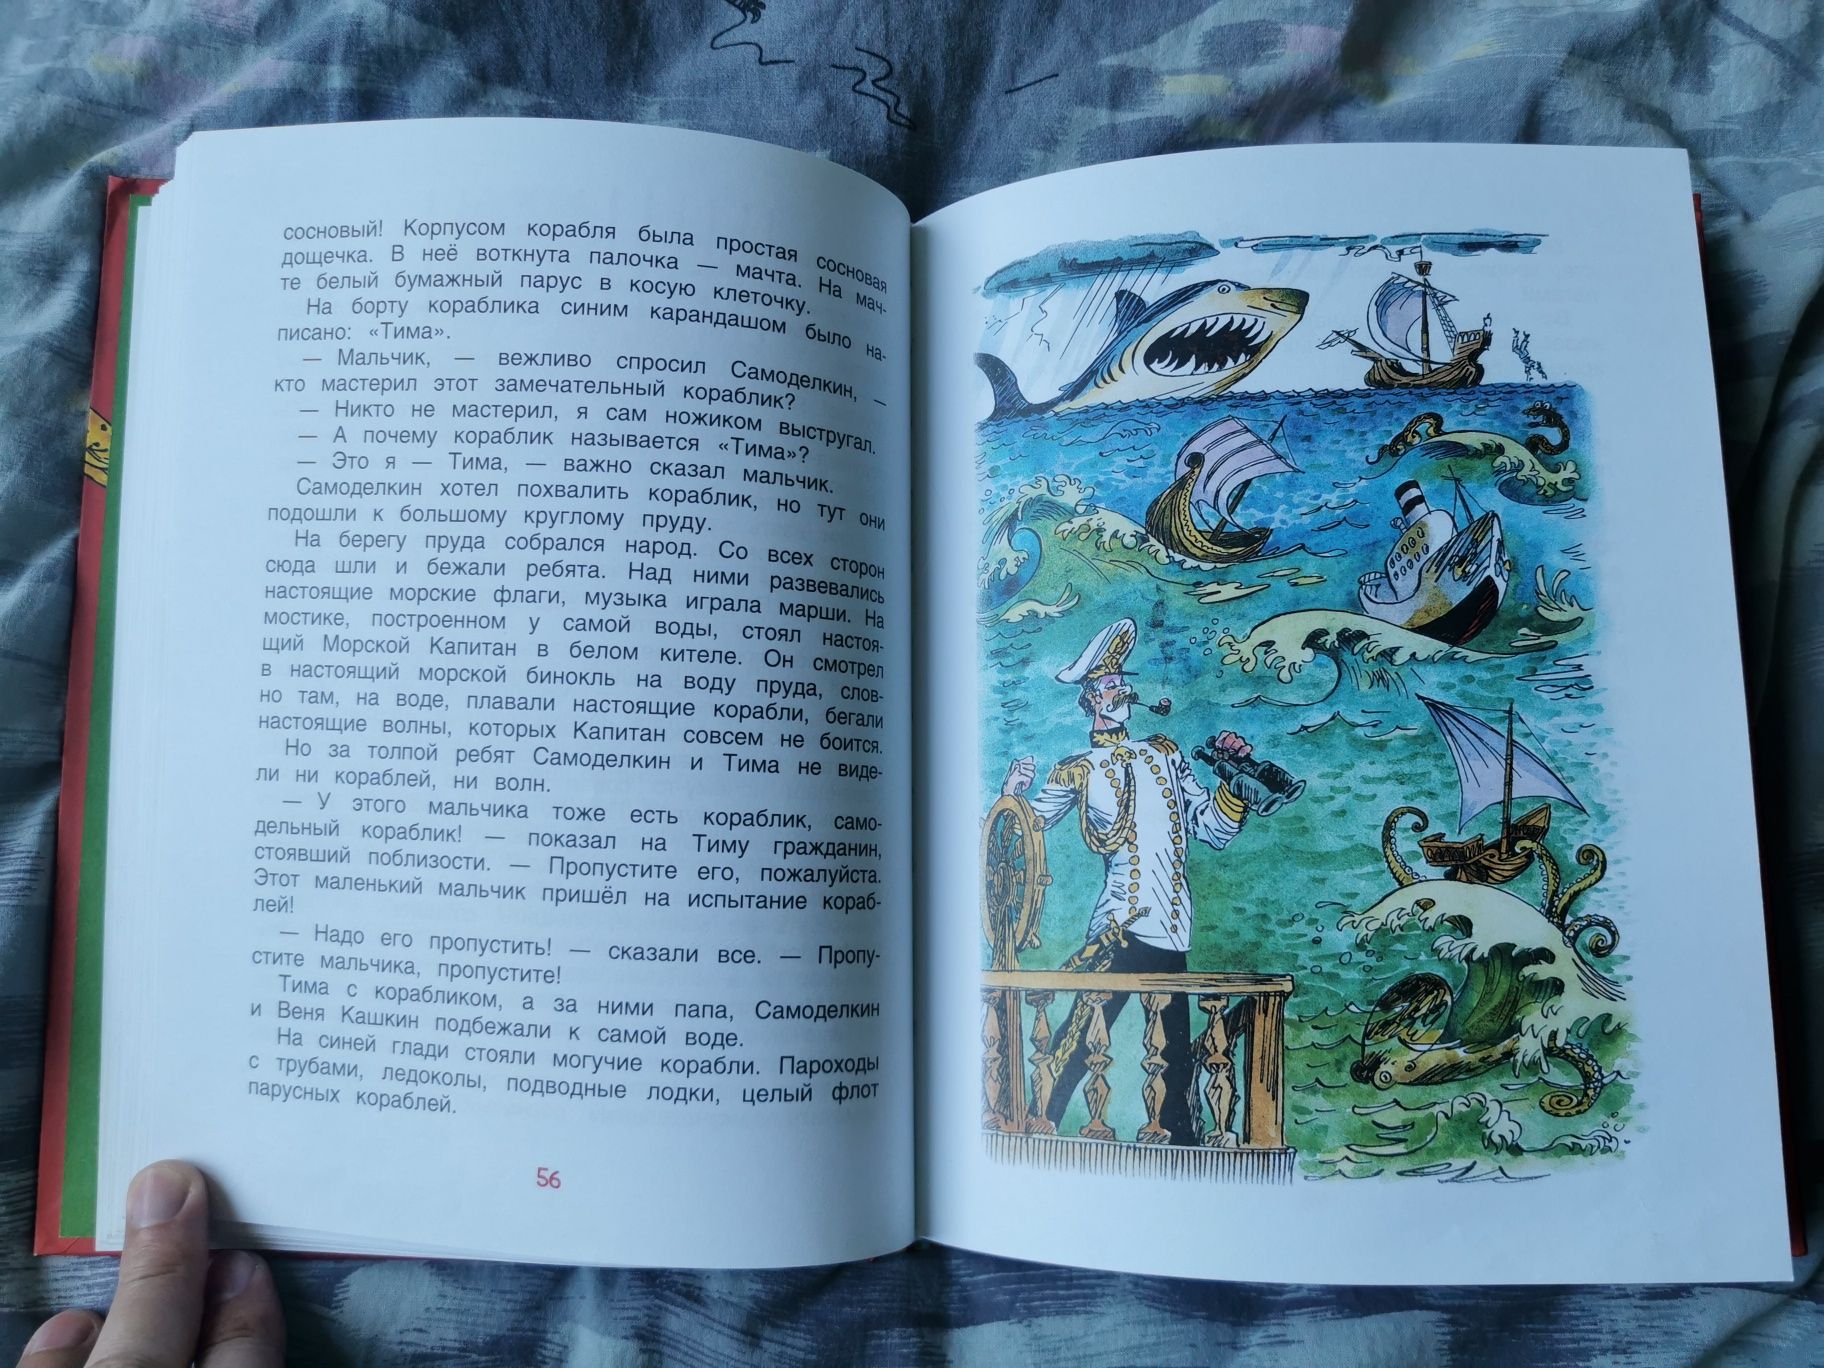 Книги Карандаш и Самоделкин російською мовою